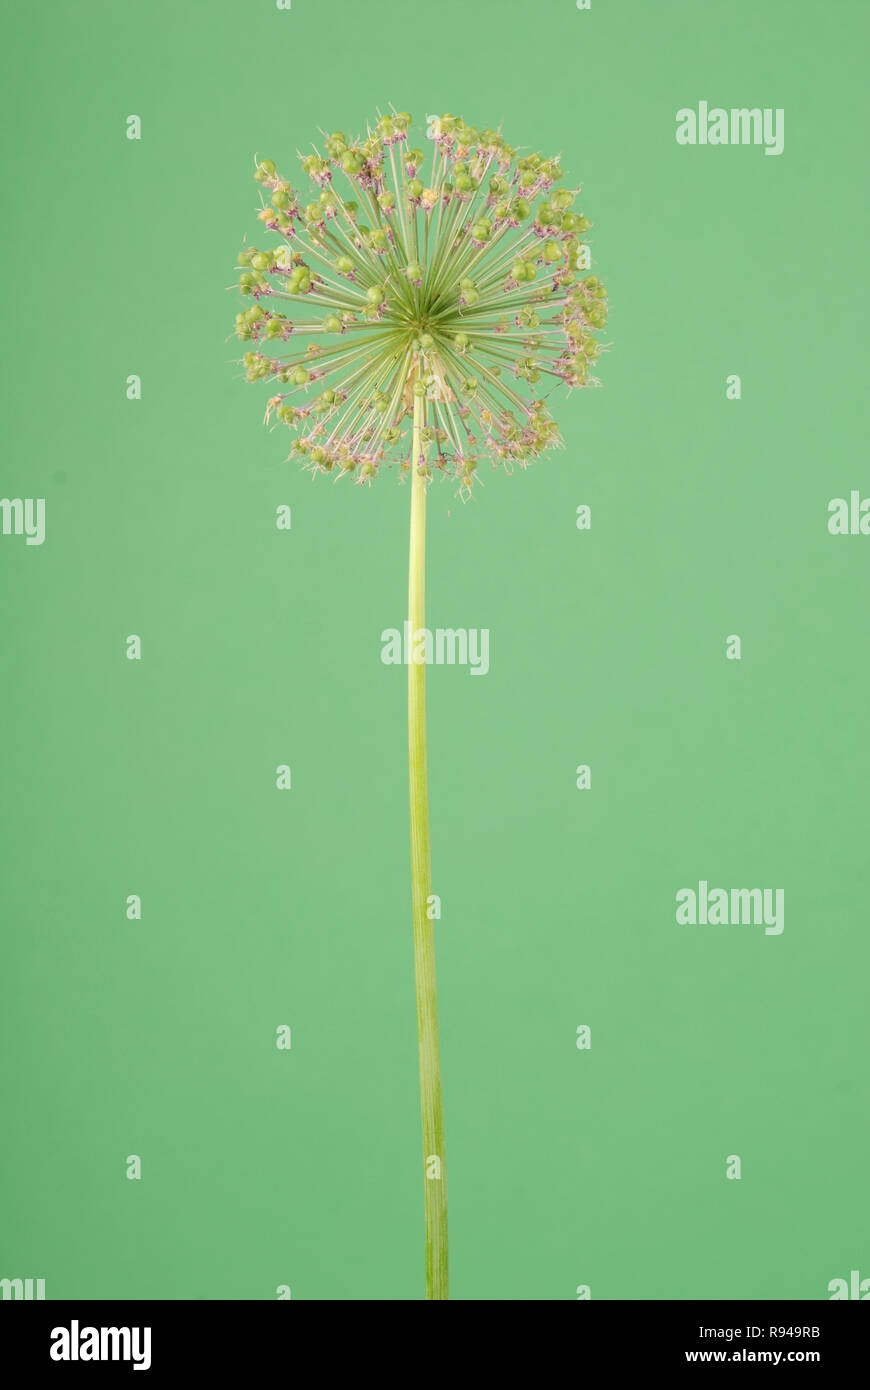 Allium flower isolated on green background Stock Photo